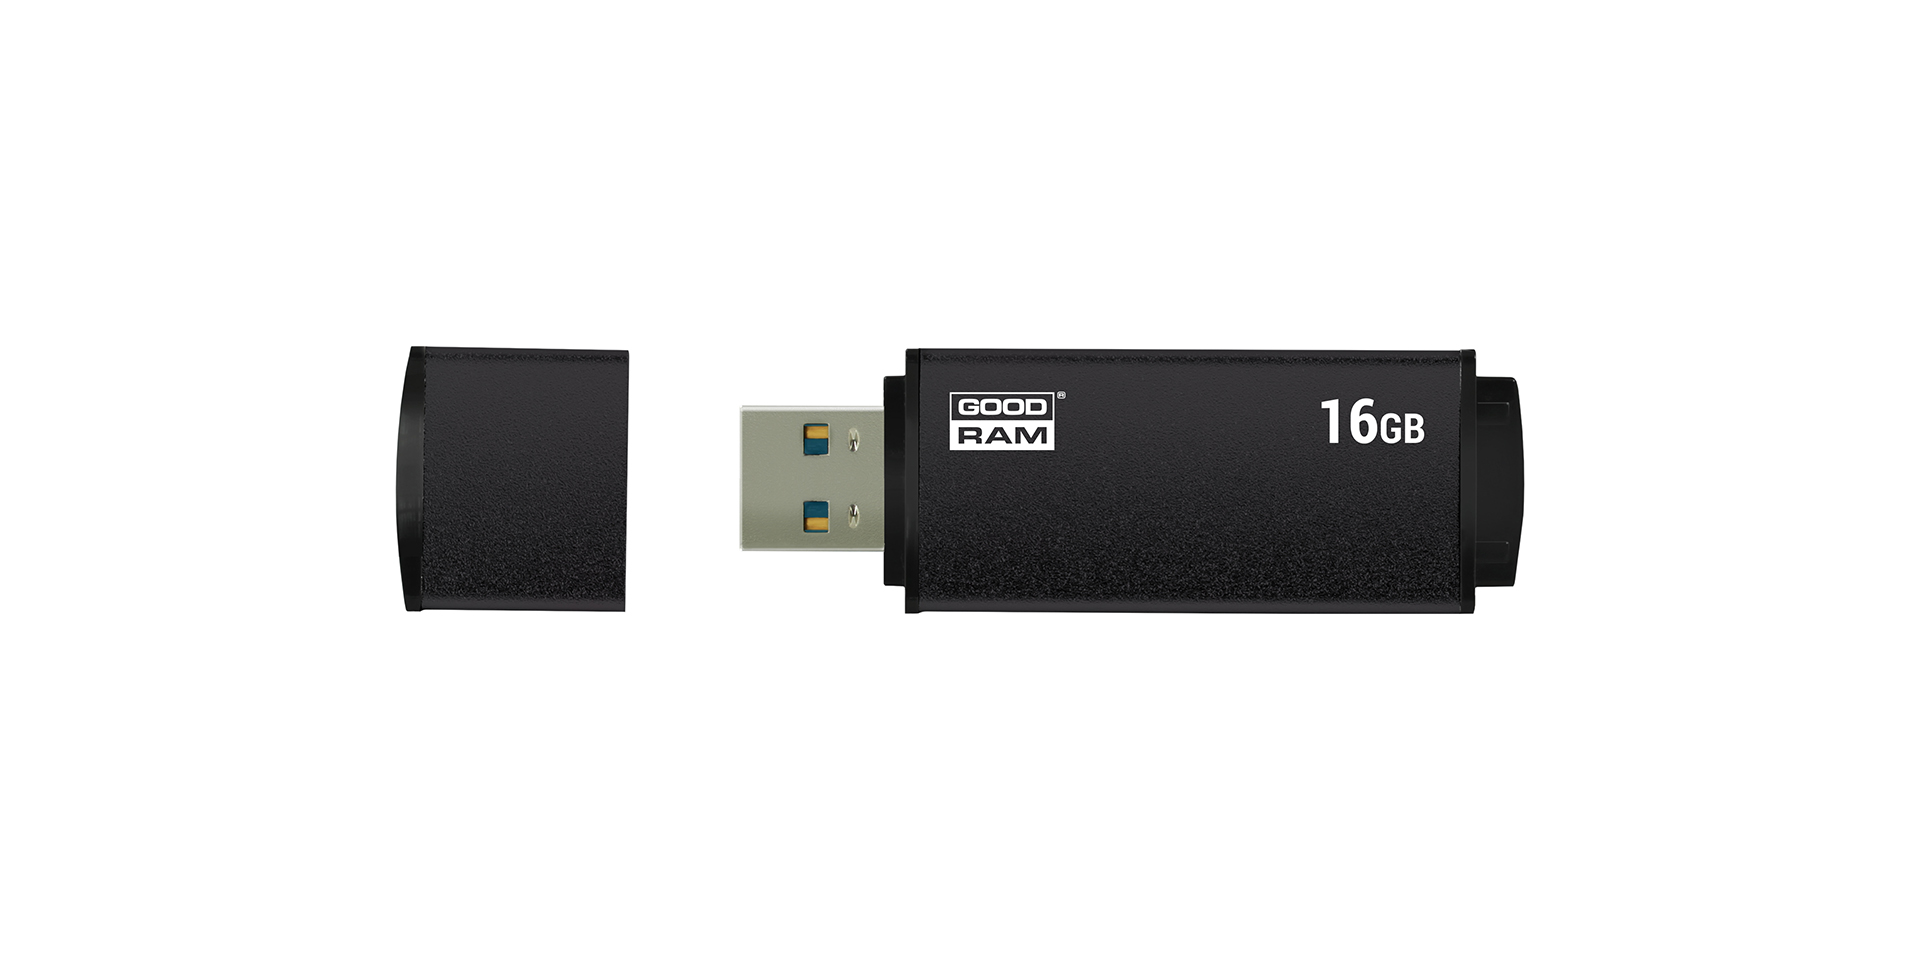 UEG3 USB 3.0 with cap